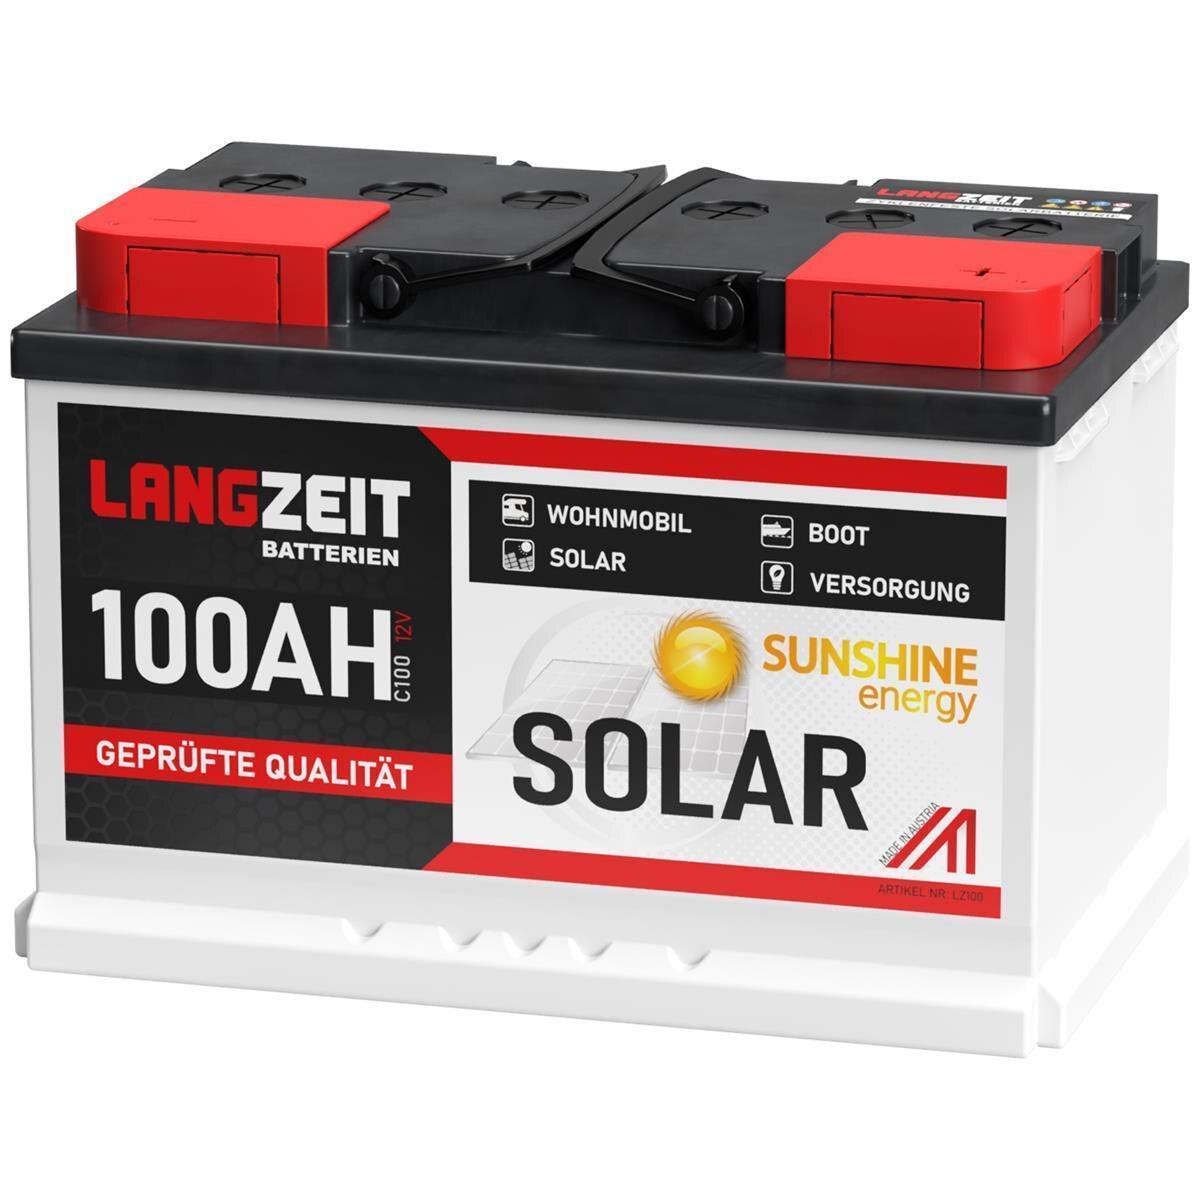 Langzeit Solarbatterie 100Ah 12V, 99,08 €